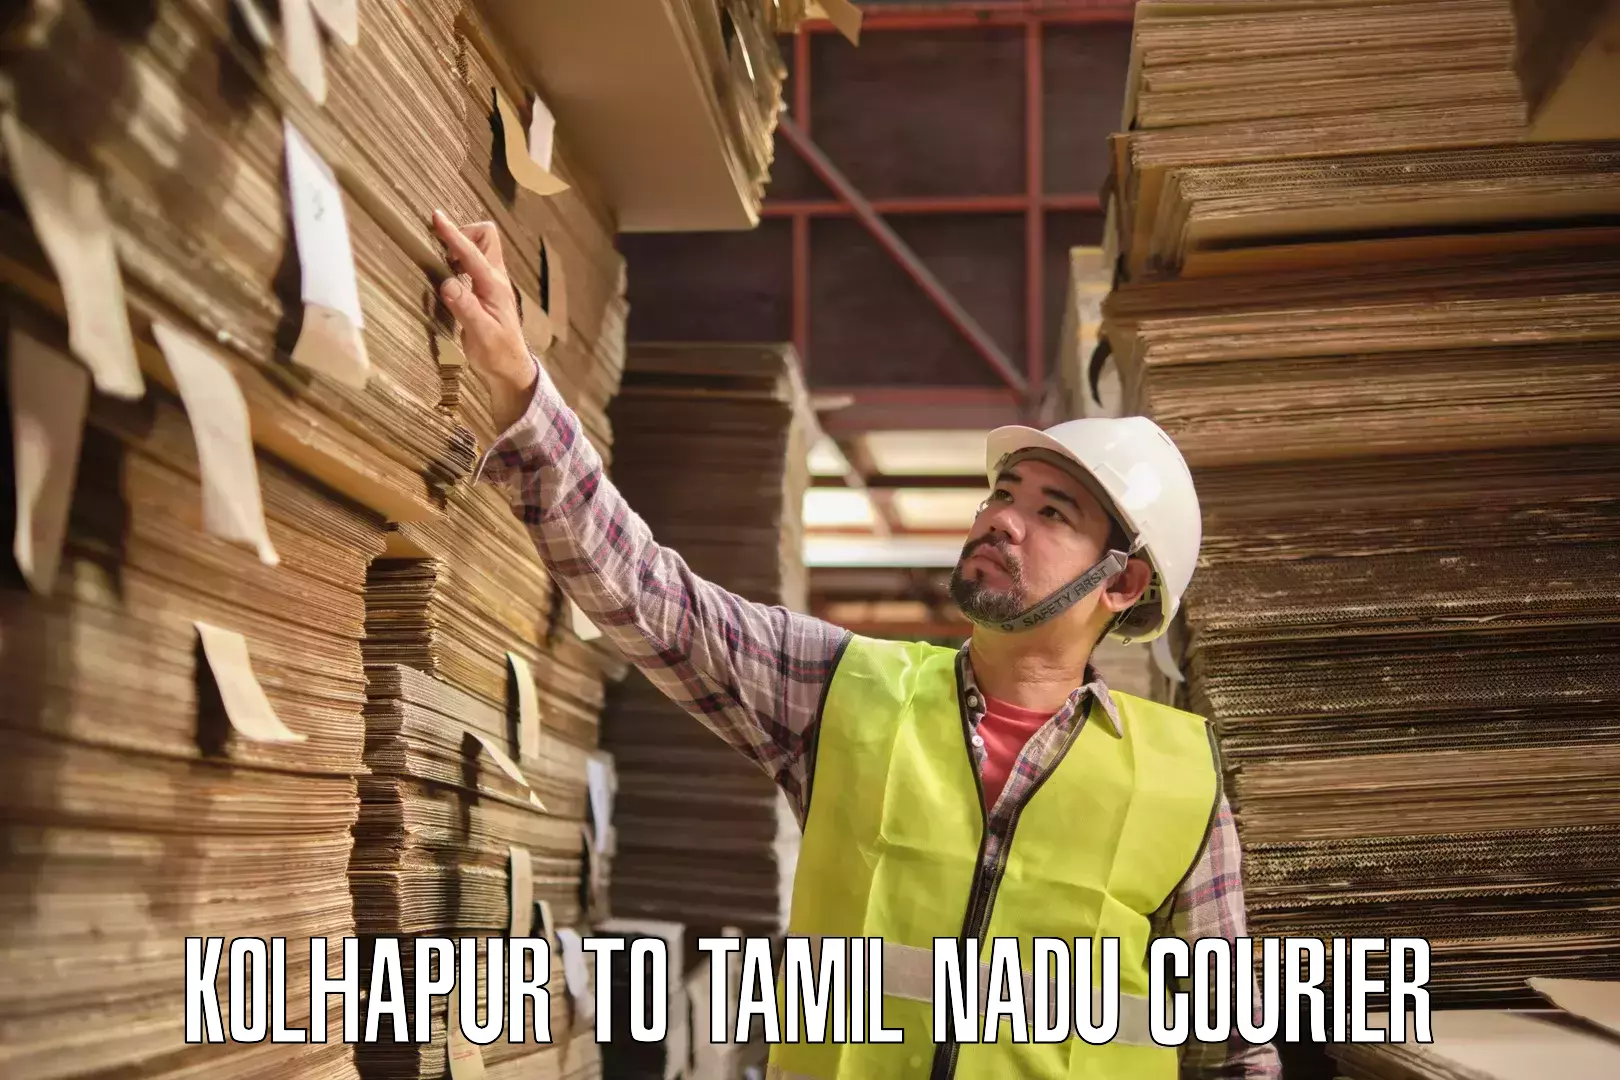 Professional courier handling Kolhapur to Tamil Nadu